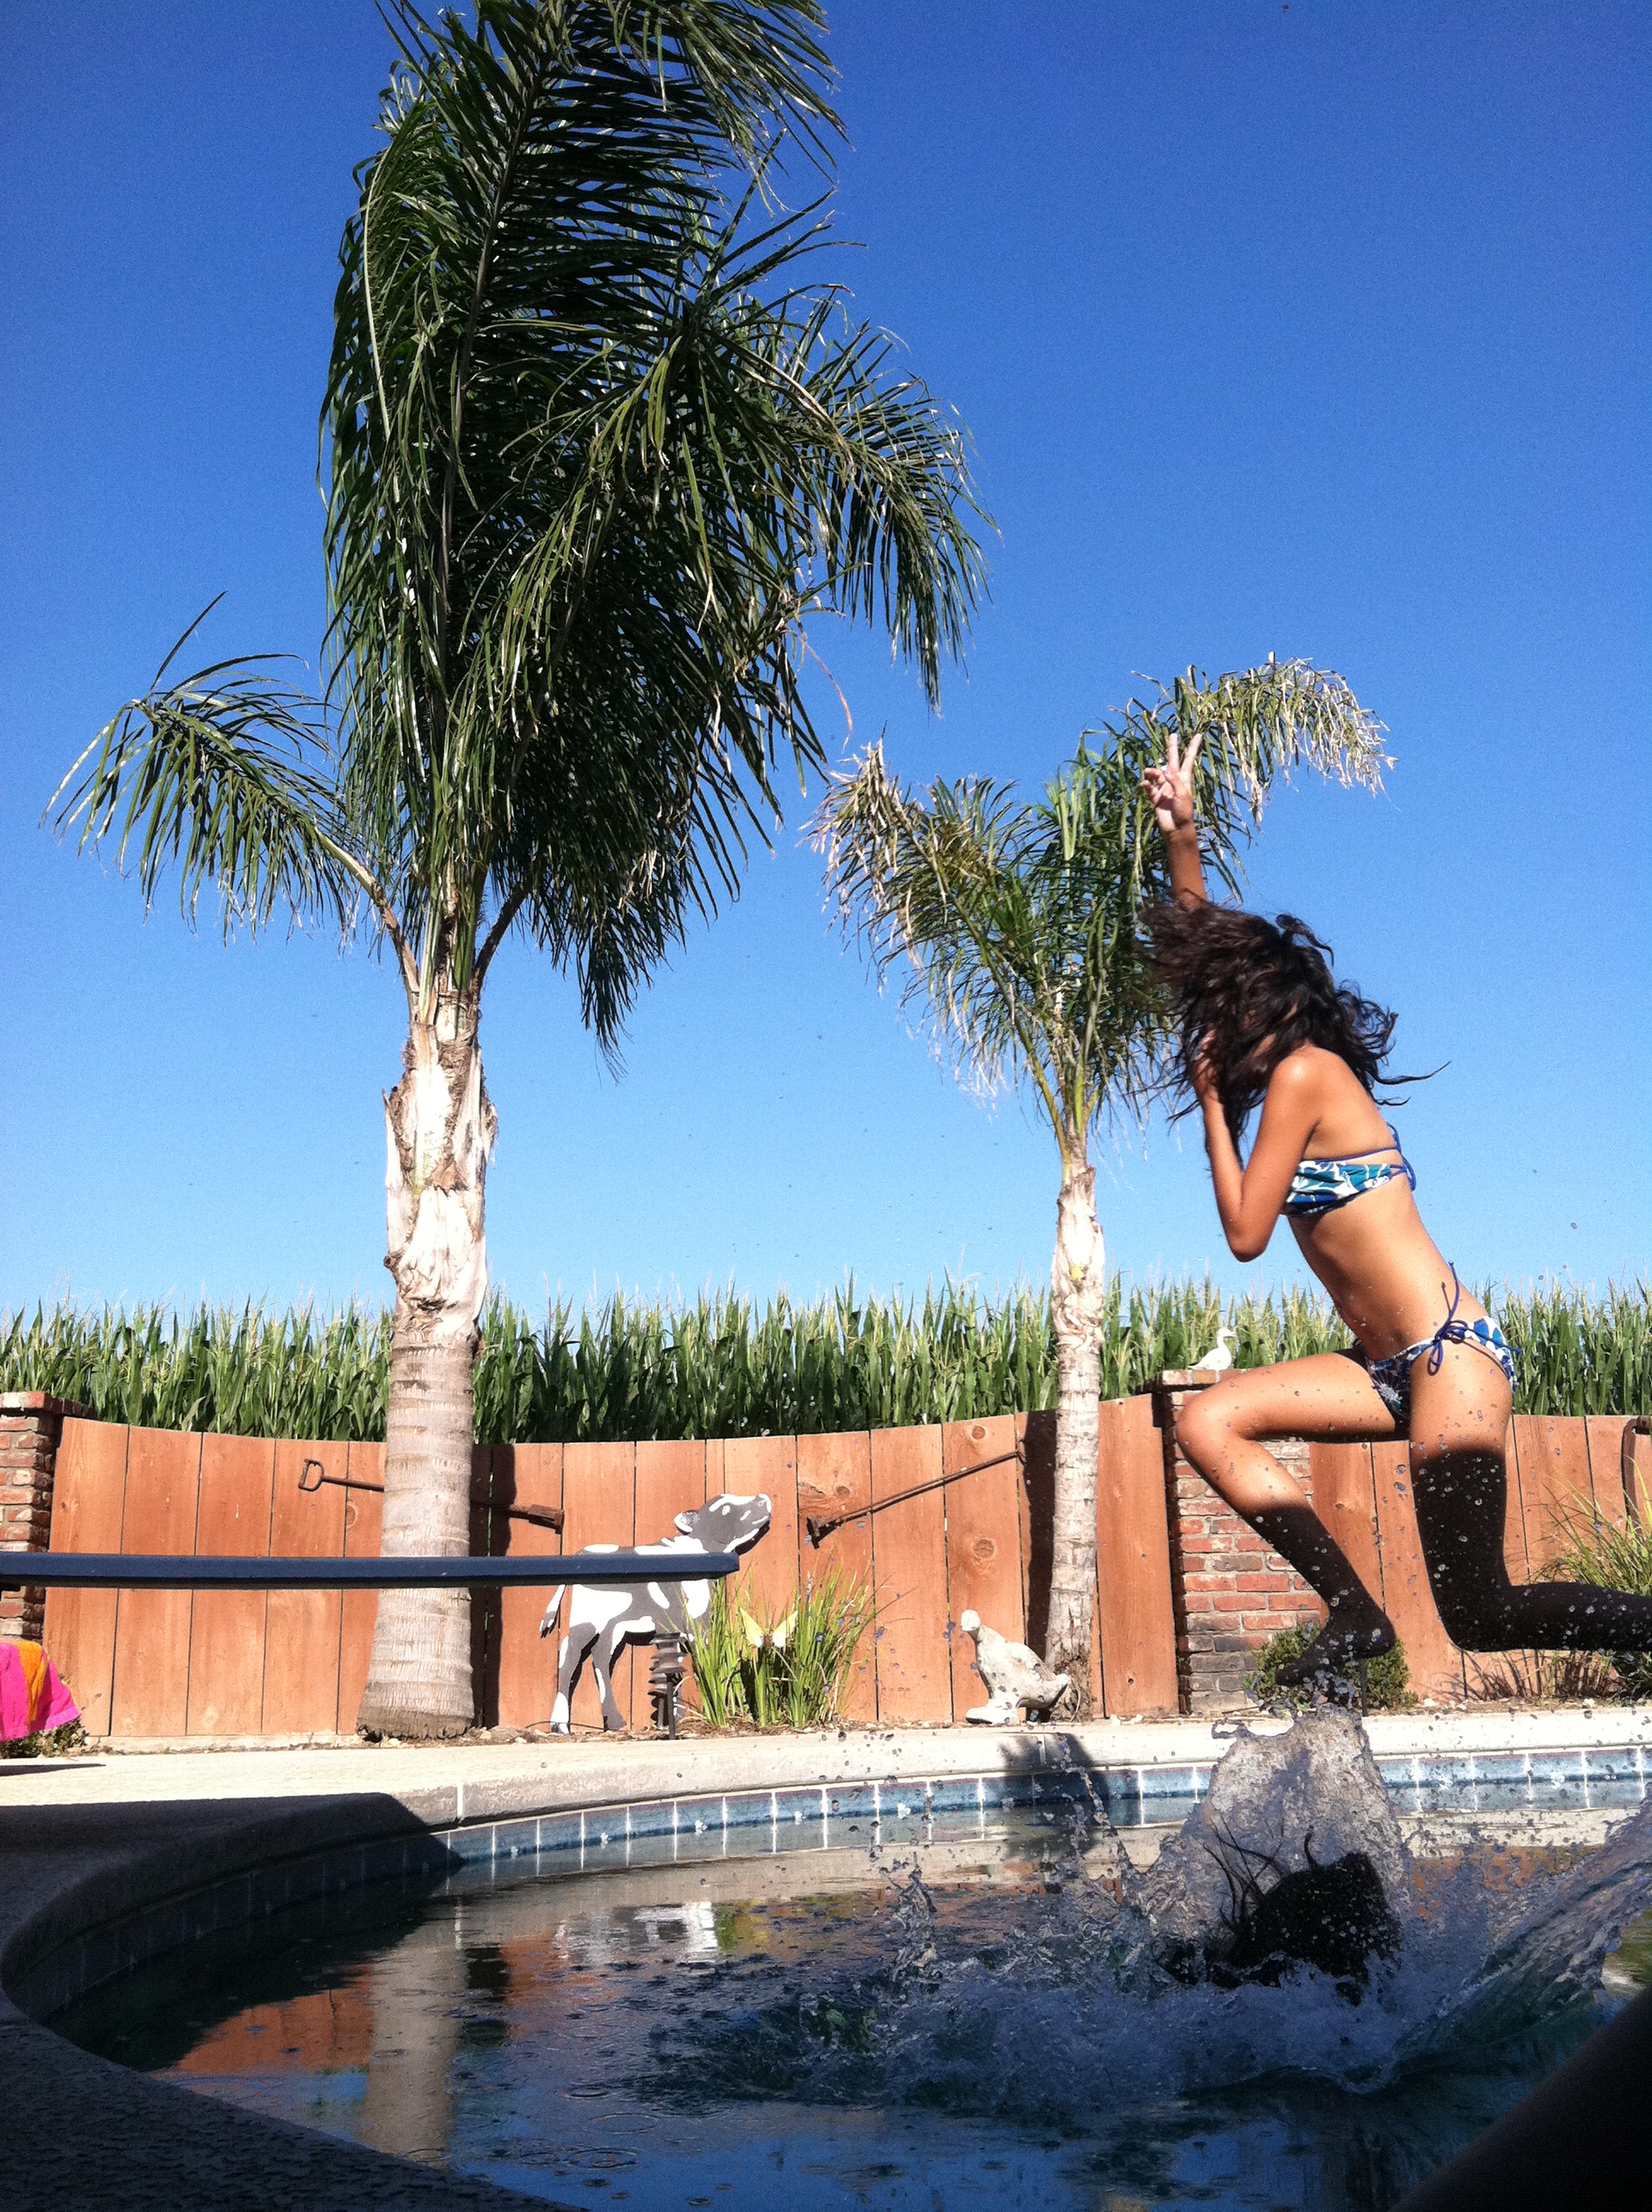 Fun at the pool, Bathing, Friends, Fun, Girls, HQ Photo